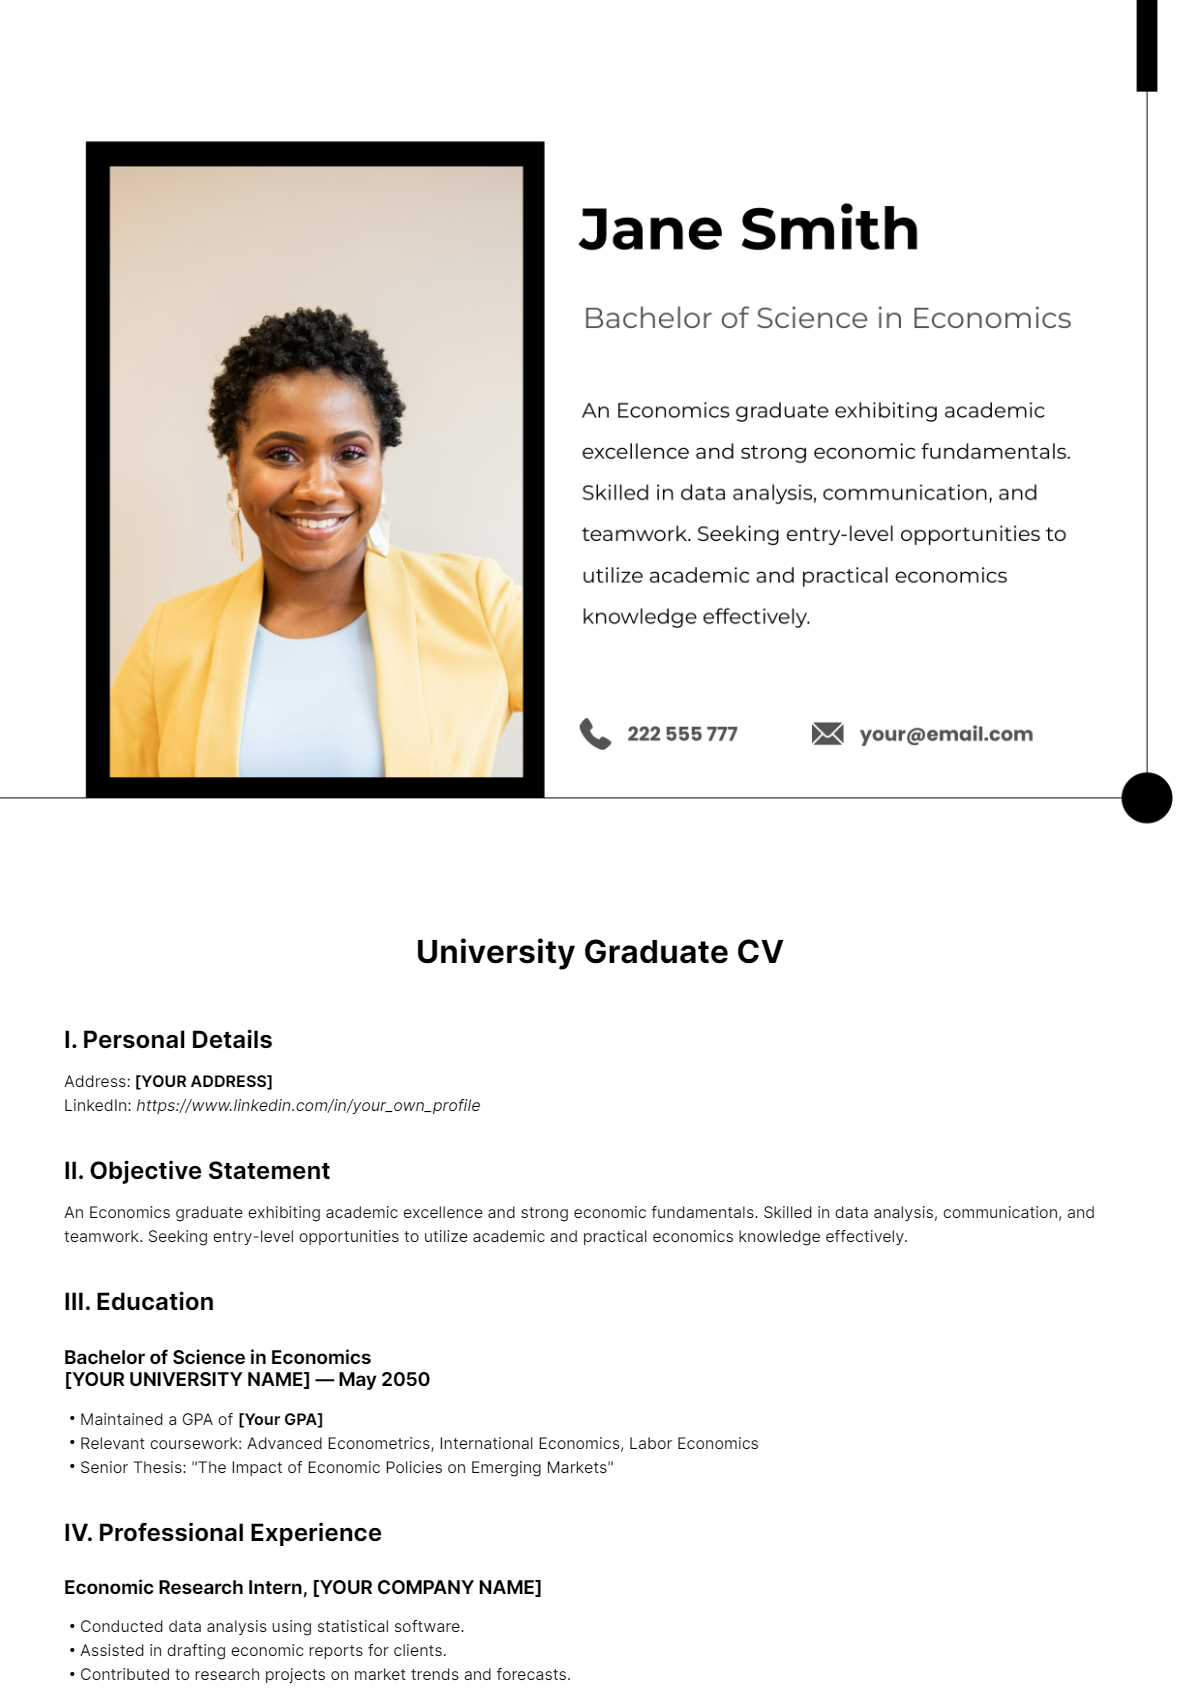 Free University Graduate CV Template